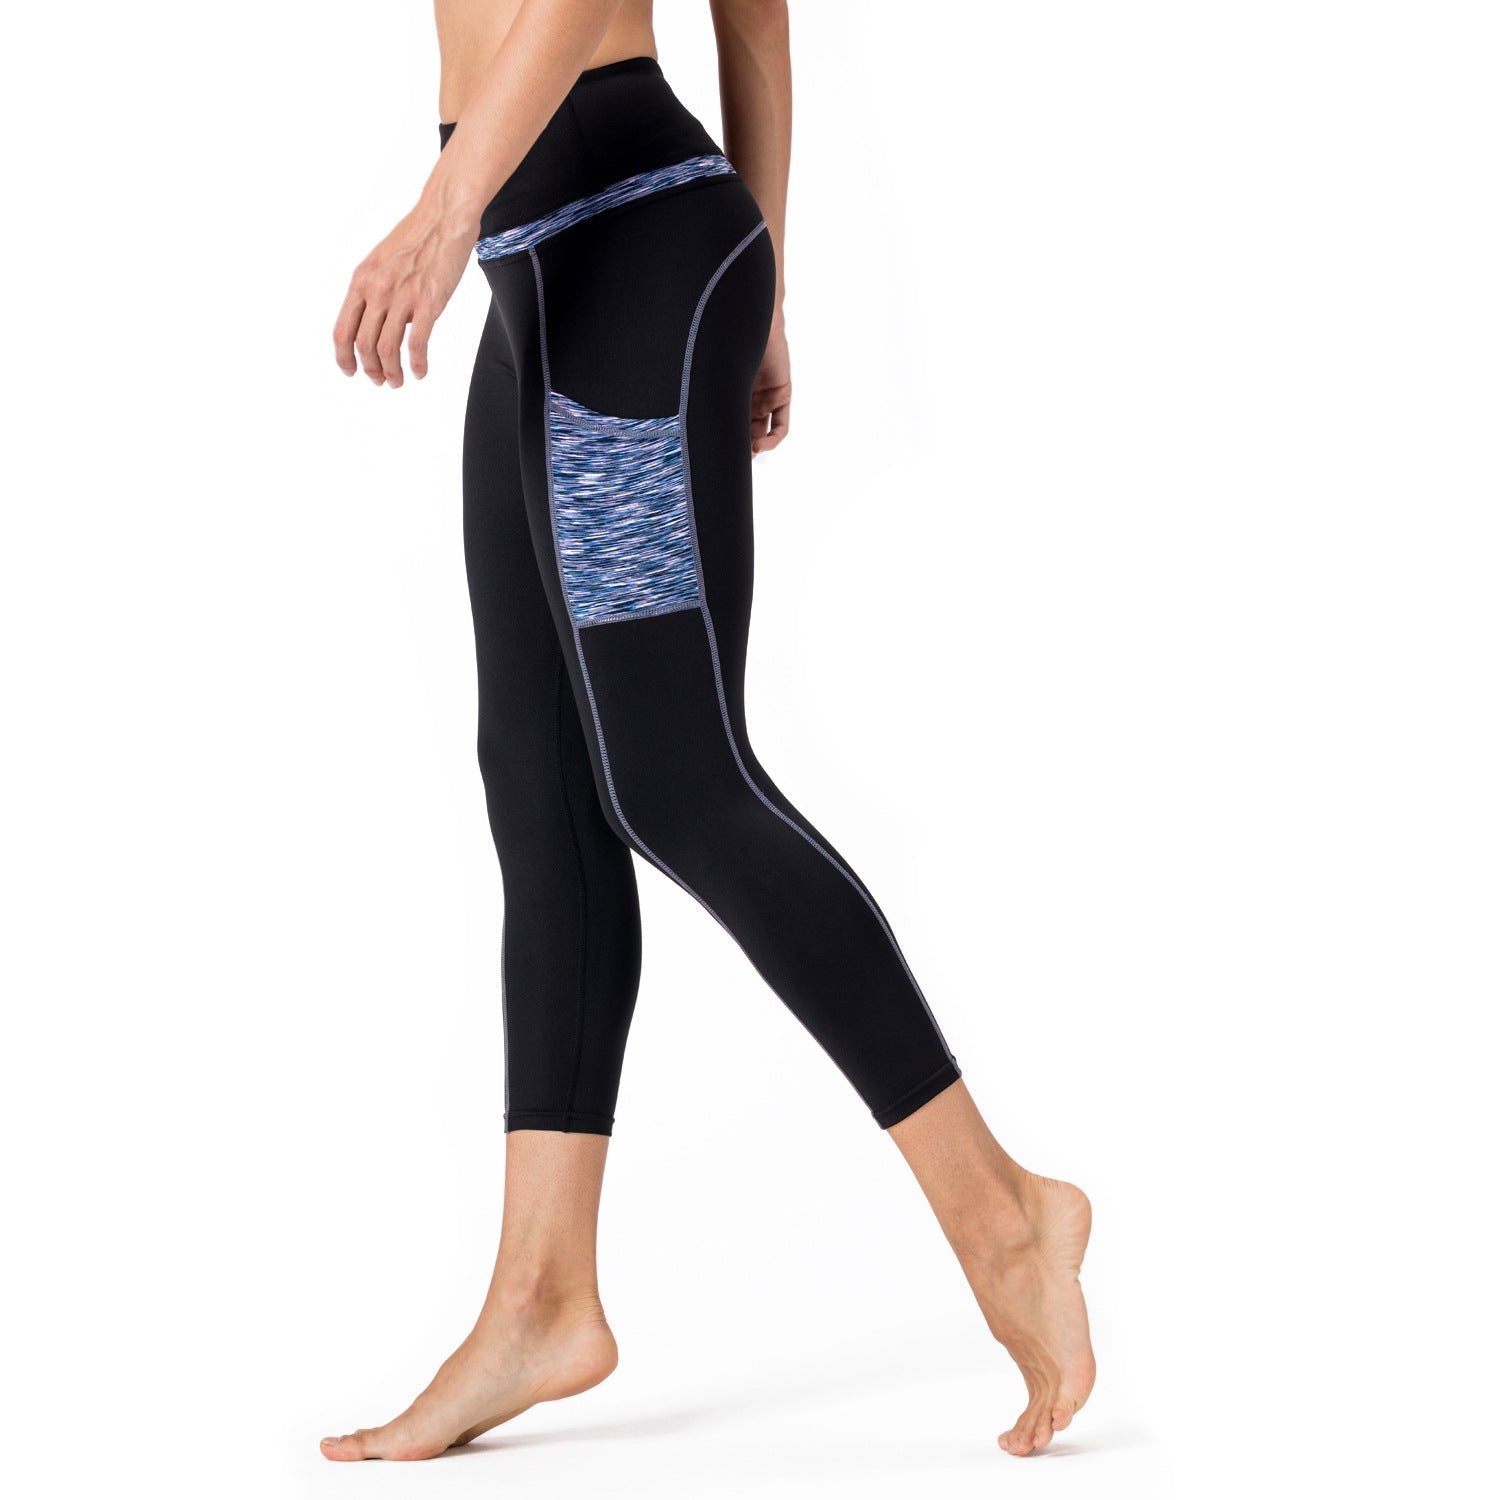 Women Contrast Color High Waist Yoga Pants 7/8 Leggings with Pockets CC201803